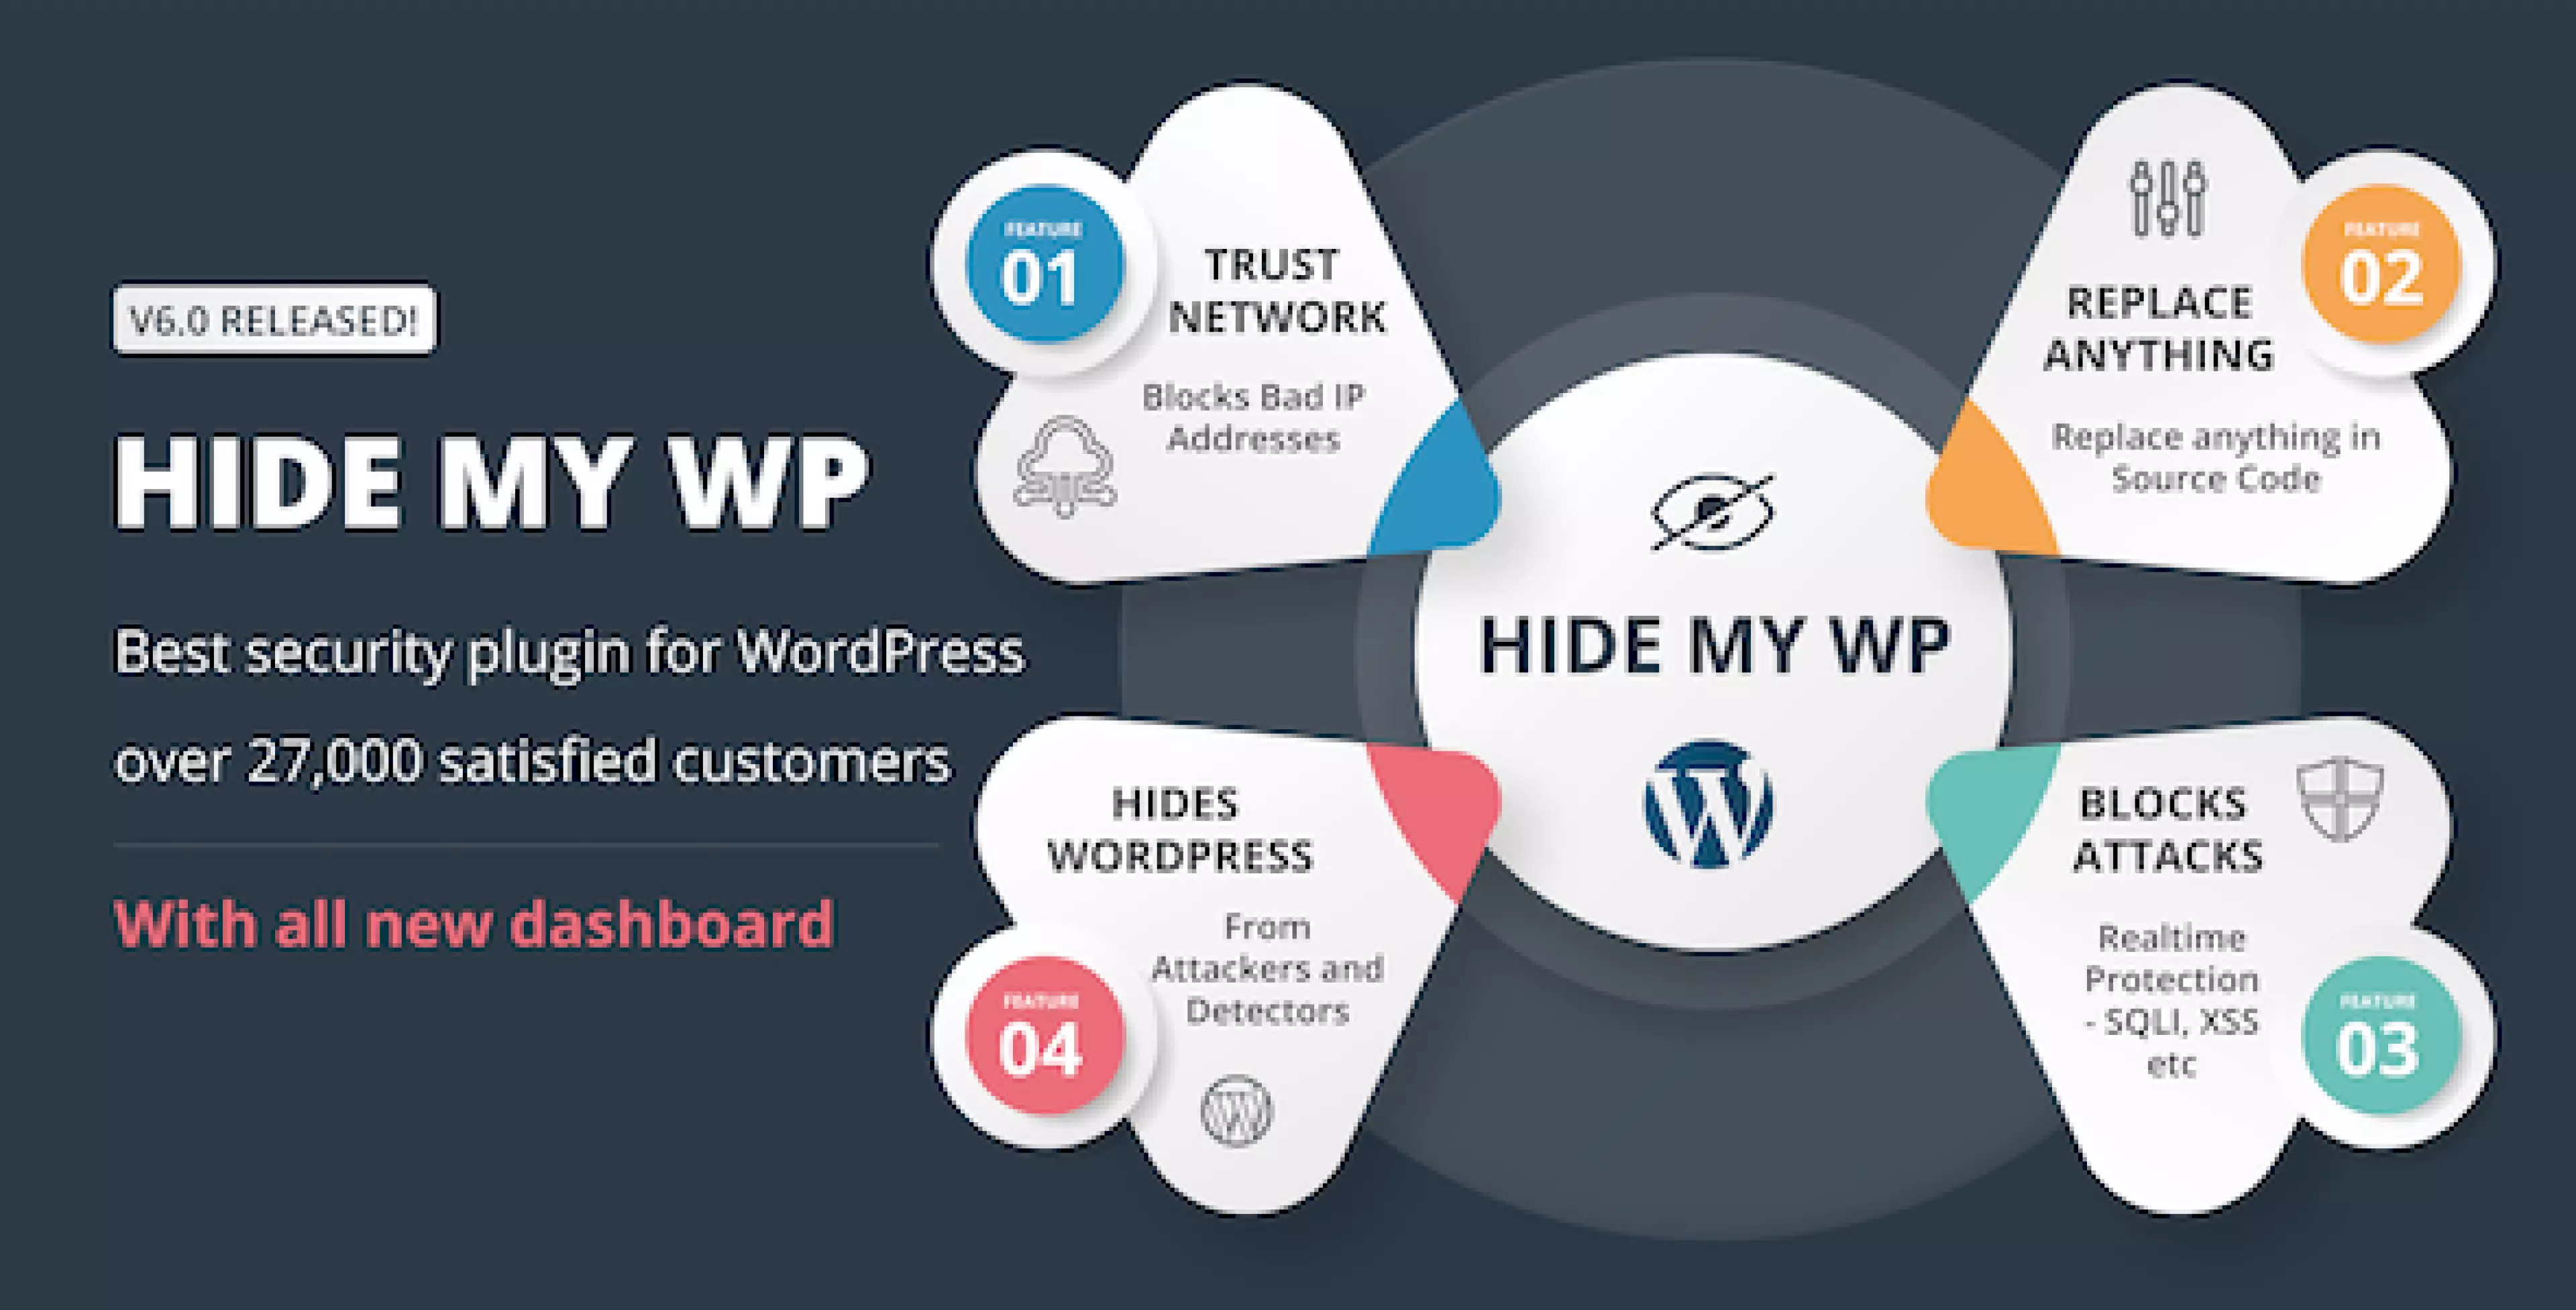 Hide My WP - Amazing Security Plugin for WordPress! 6.2.2